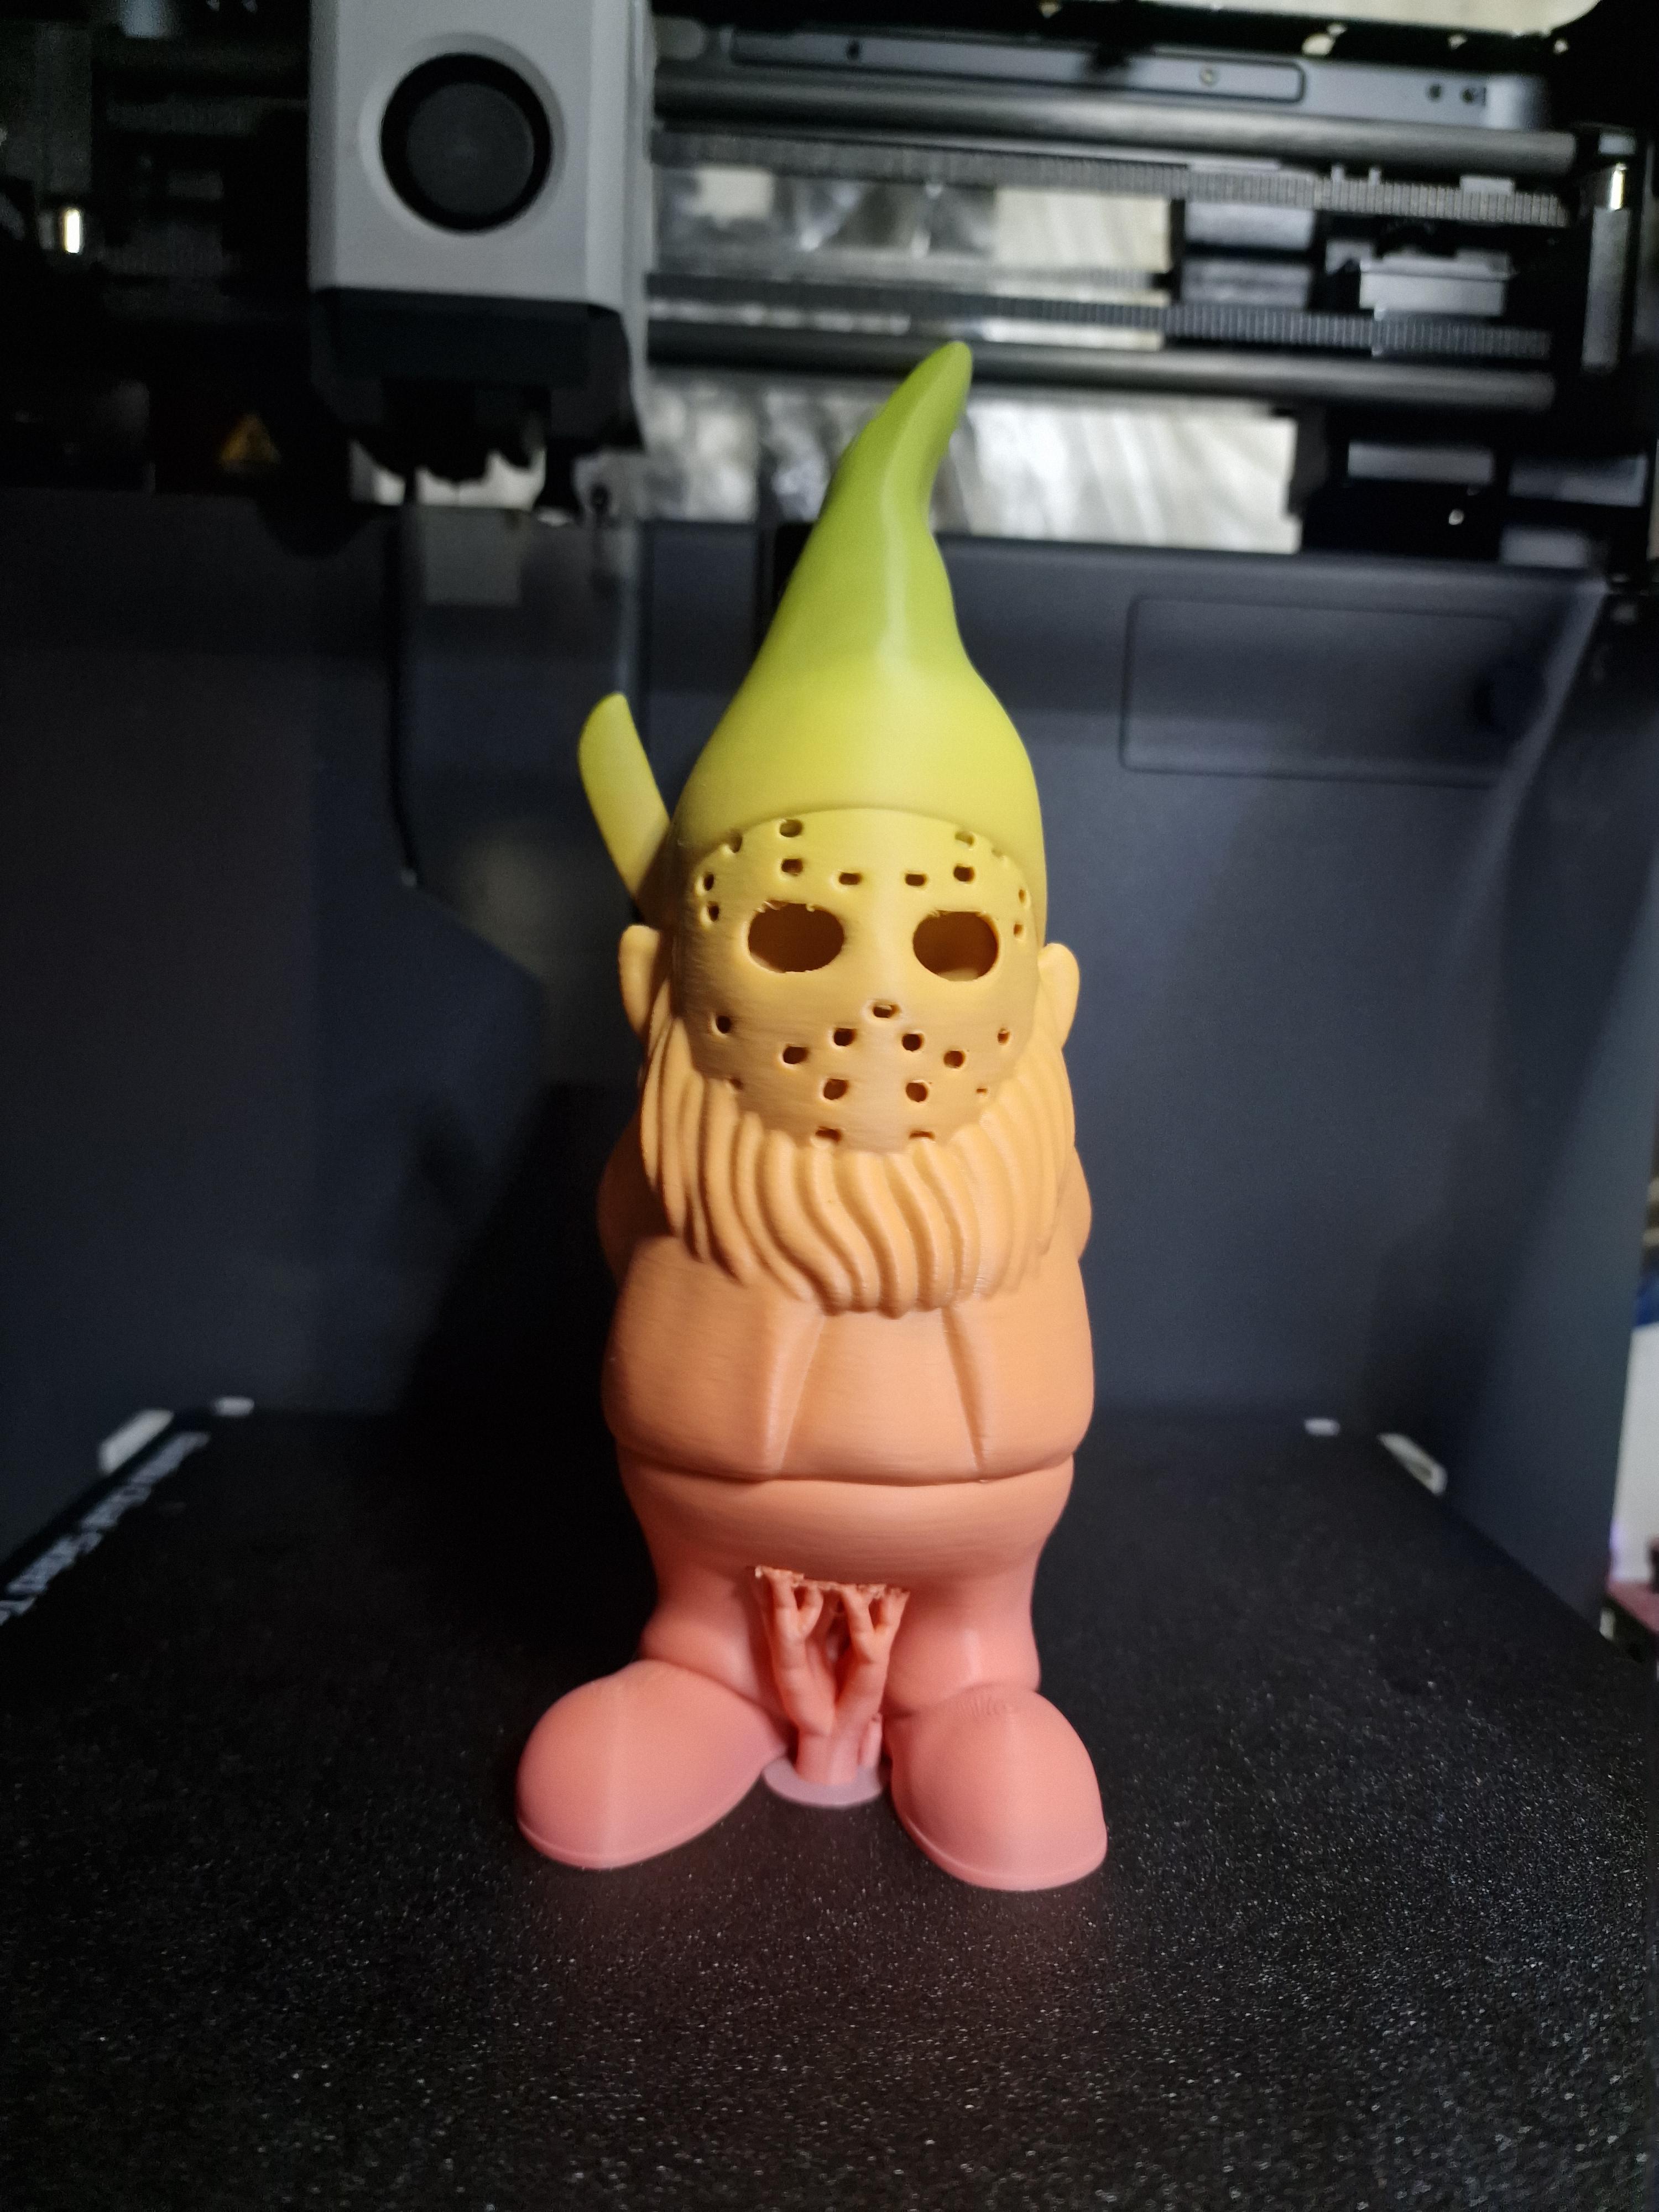 Murderous Gnome 3d model